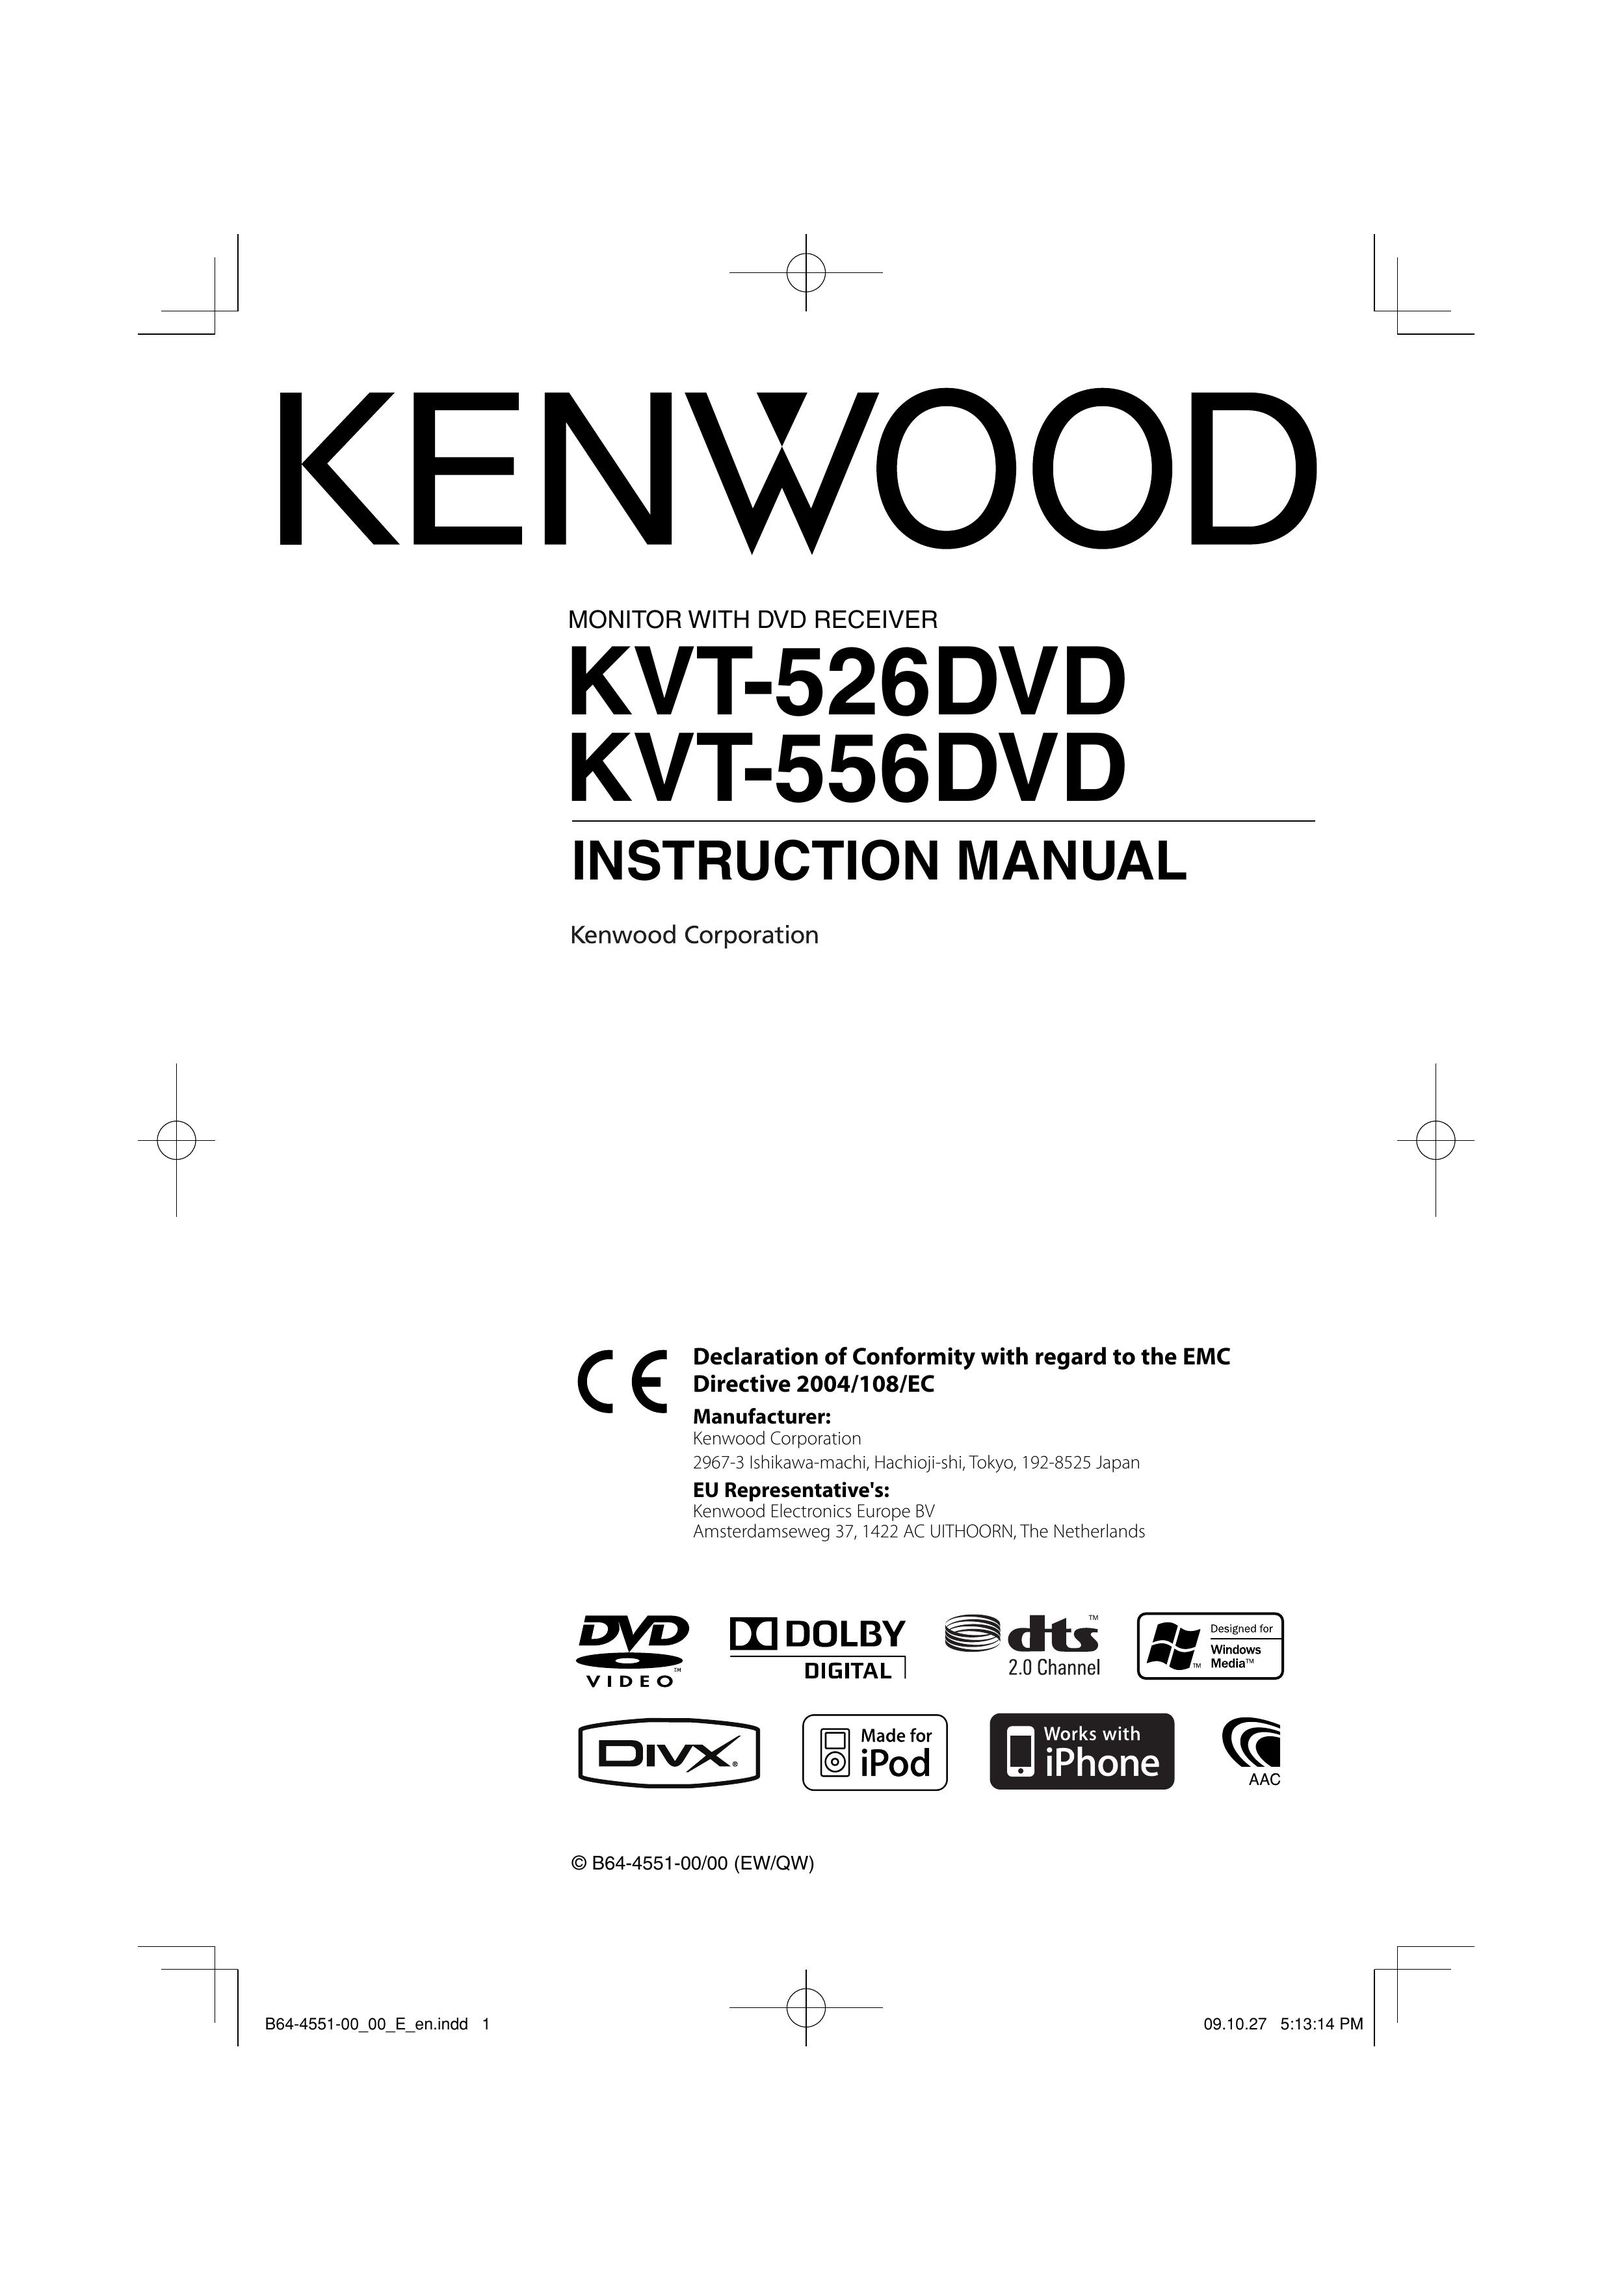 Kenwood KVT-526DVD Computer Drive User Manual